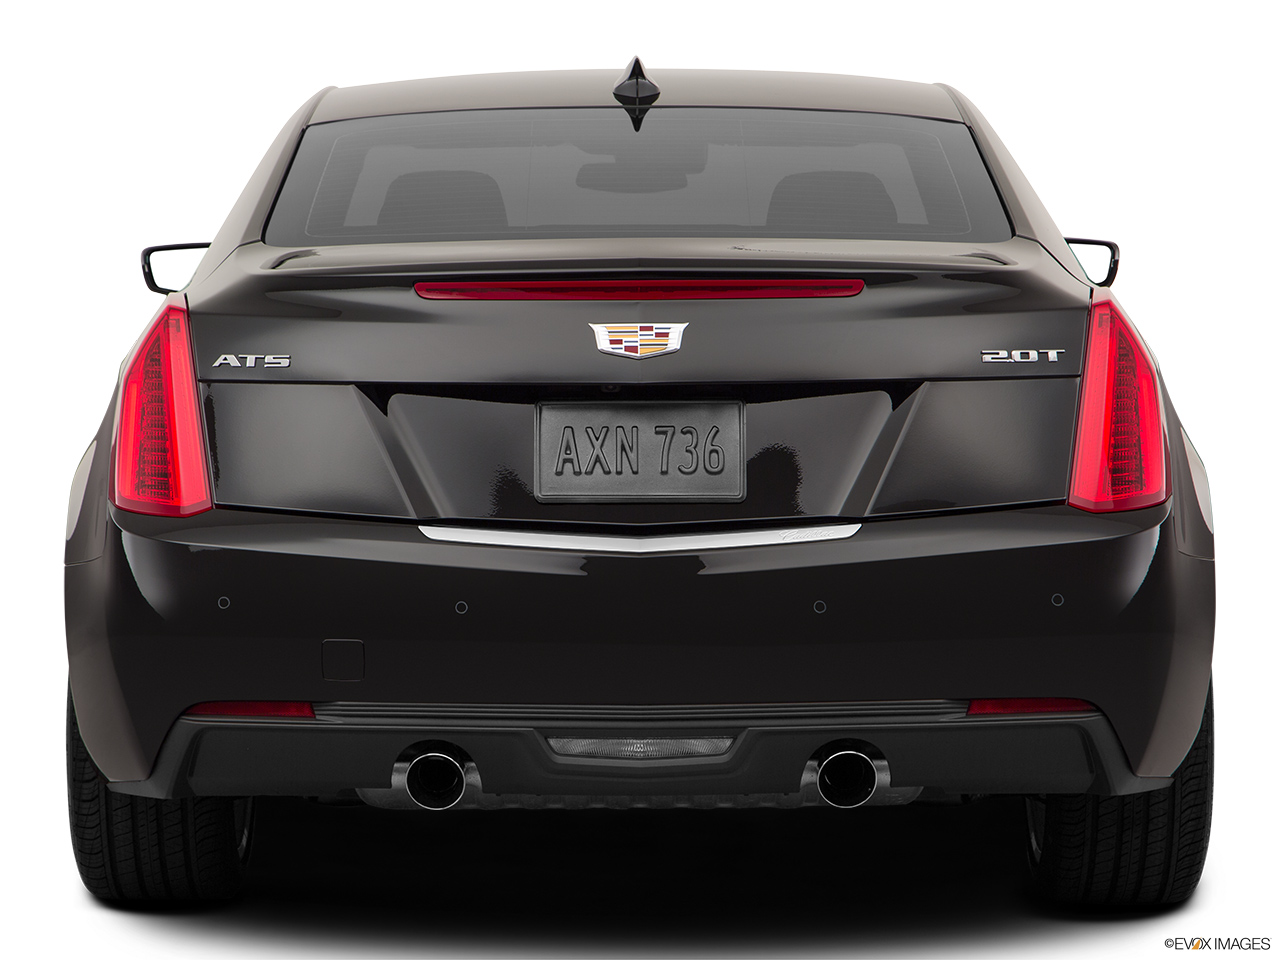 2019 Cadillac ATS Luxury Low/wide rear. 